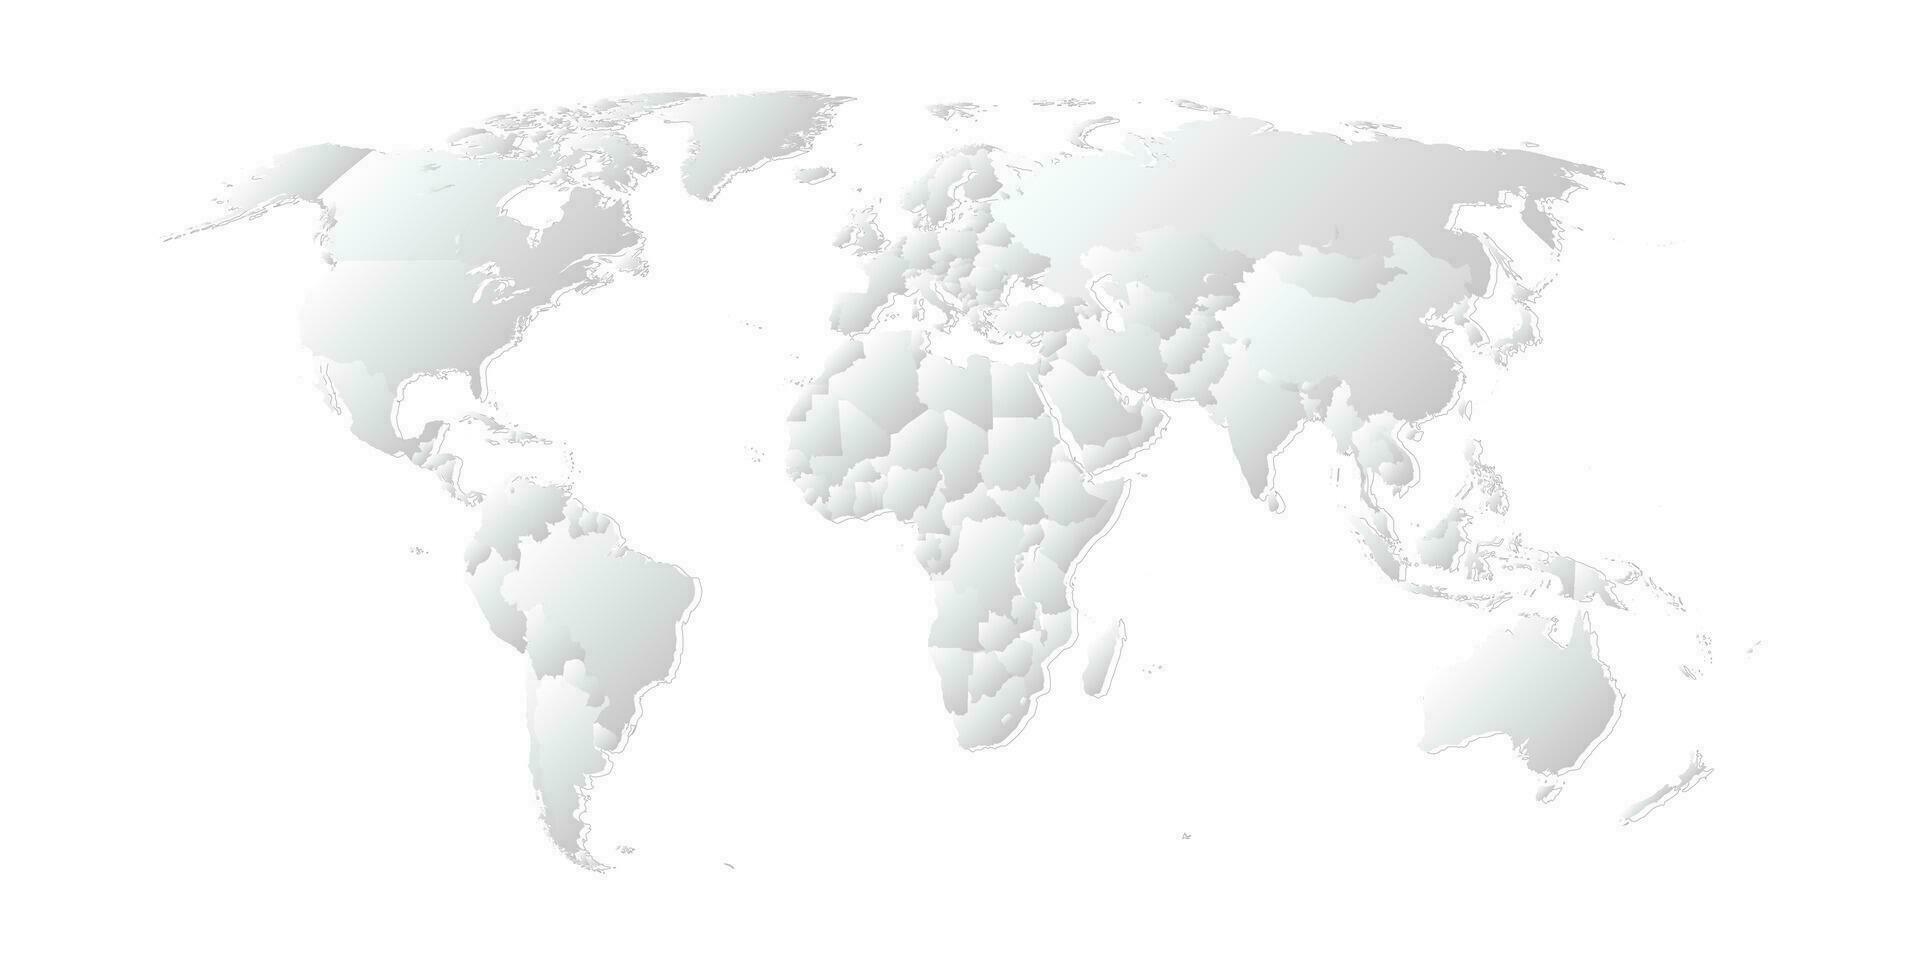 moderno mundo mapa con conexión líneas y capital ciudades vector